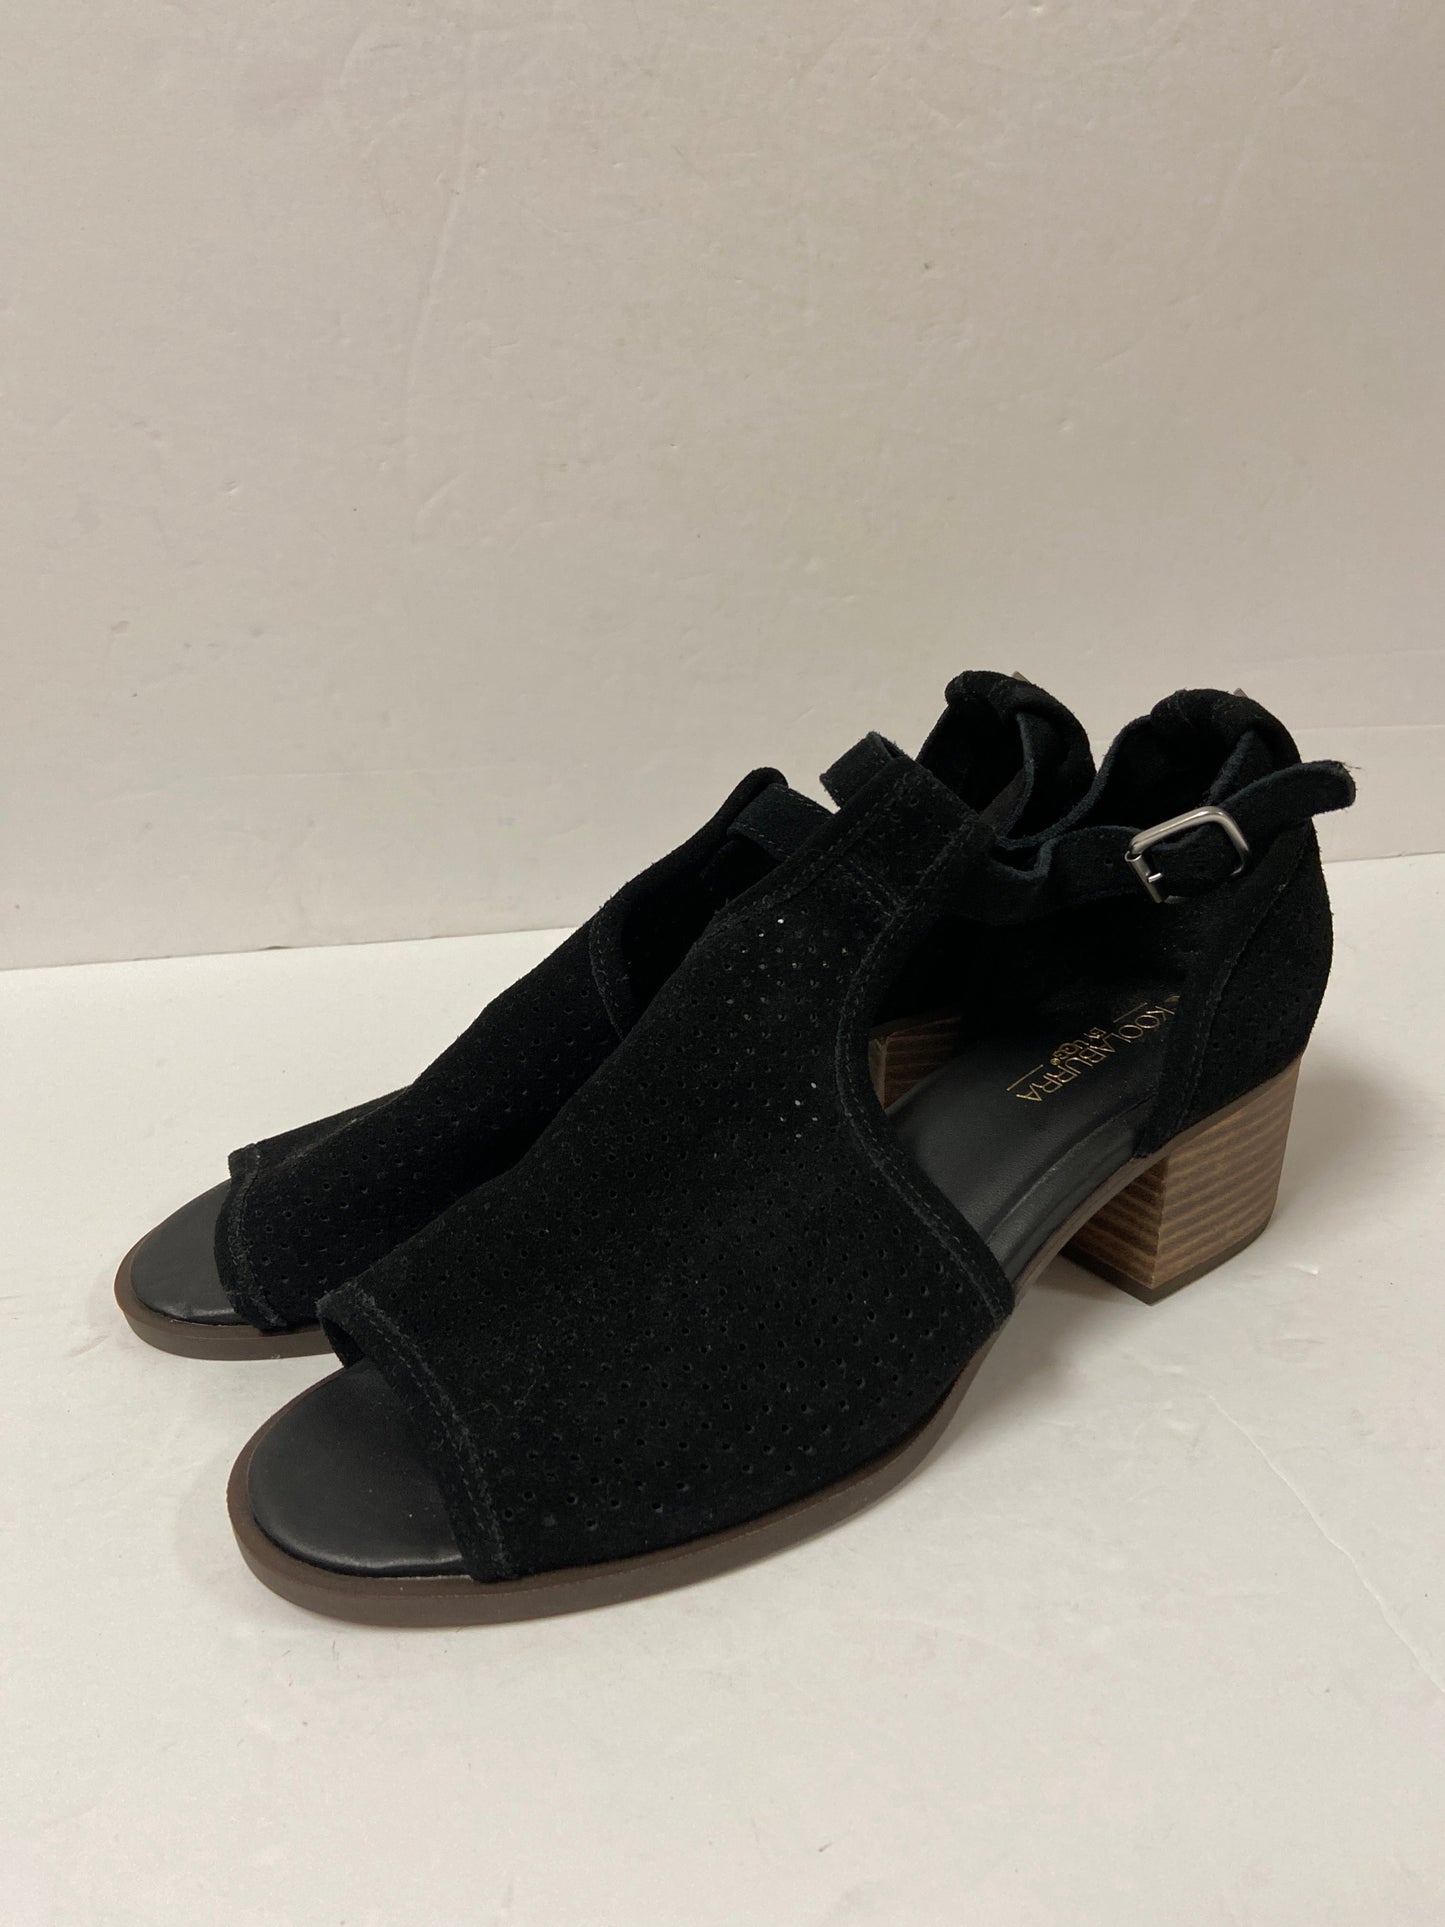 Sandals Heels Block By Koolaburra By Ugg  Size: 9